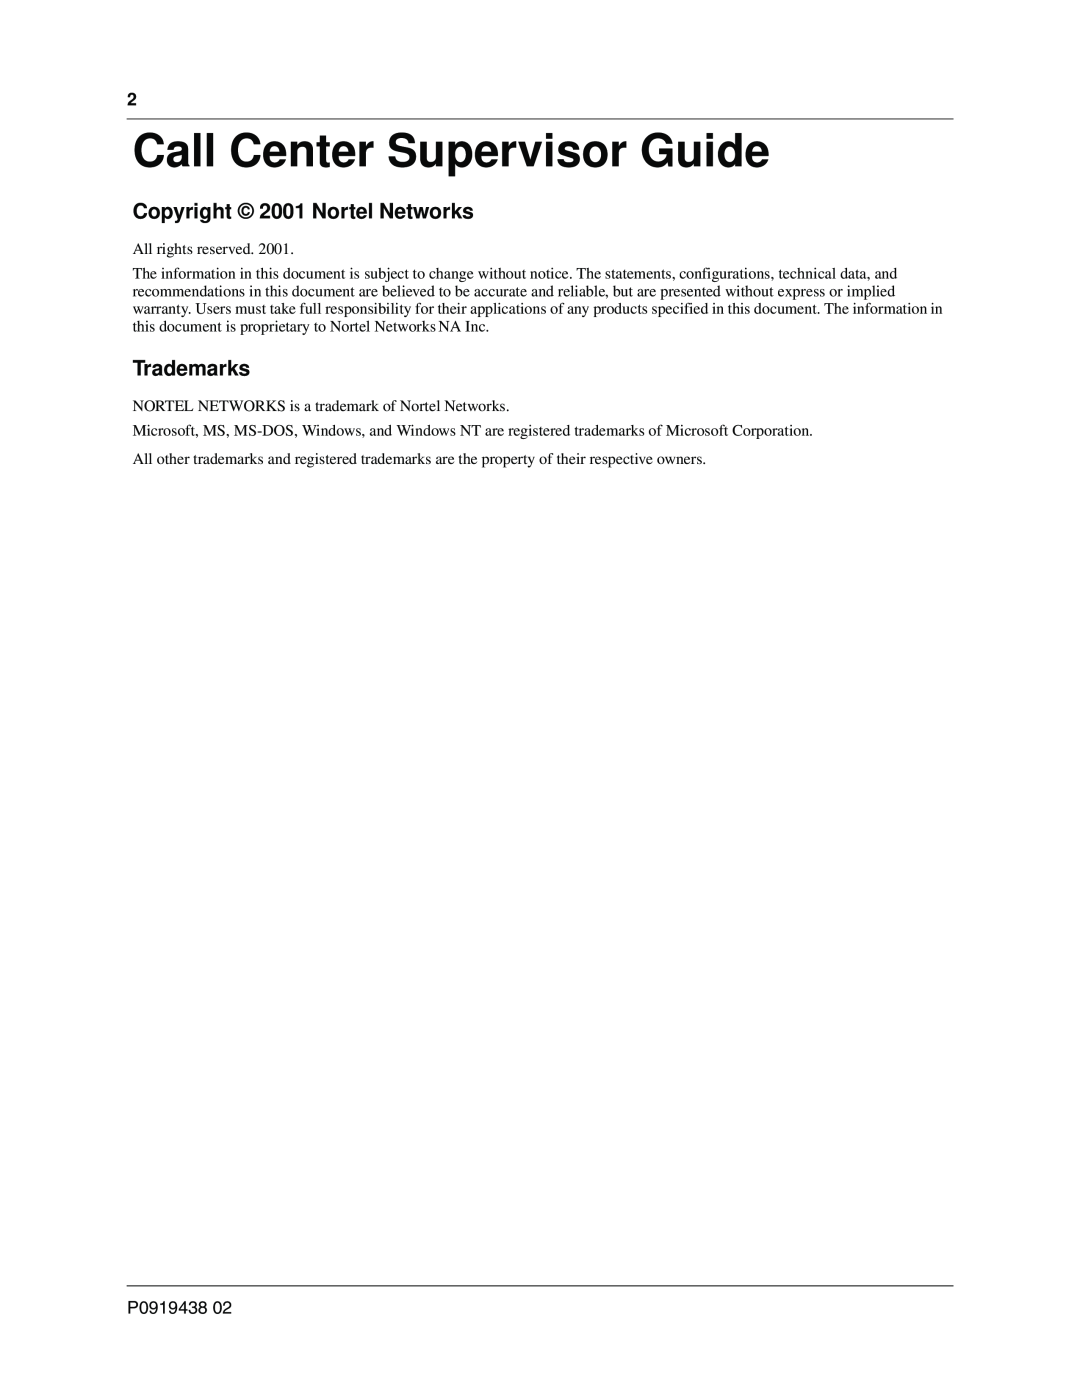 Nortel Networks P0919438 02 manual Copyright 2001 Nortel Networks, Trademarks, Call Center Supervisor Guide 